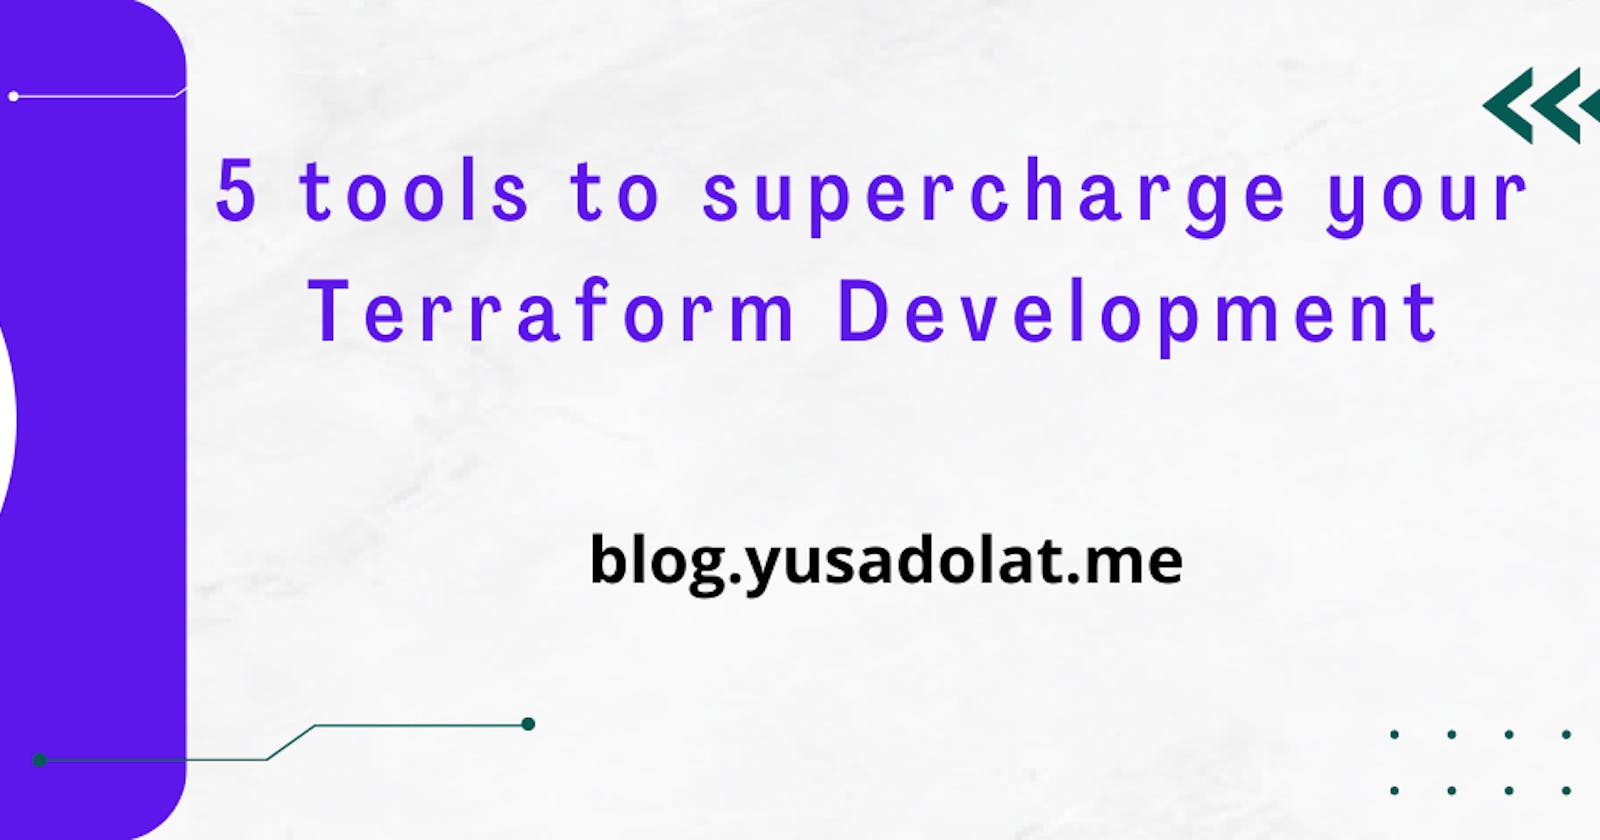 5 tools to supercharge your Terraform Development